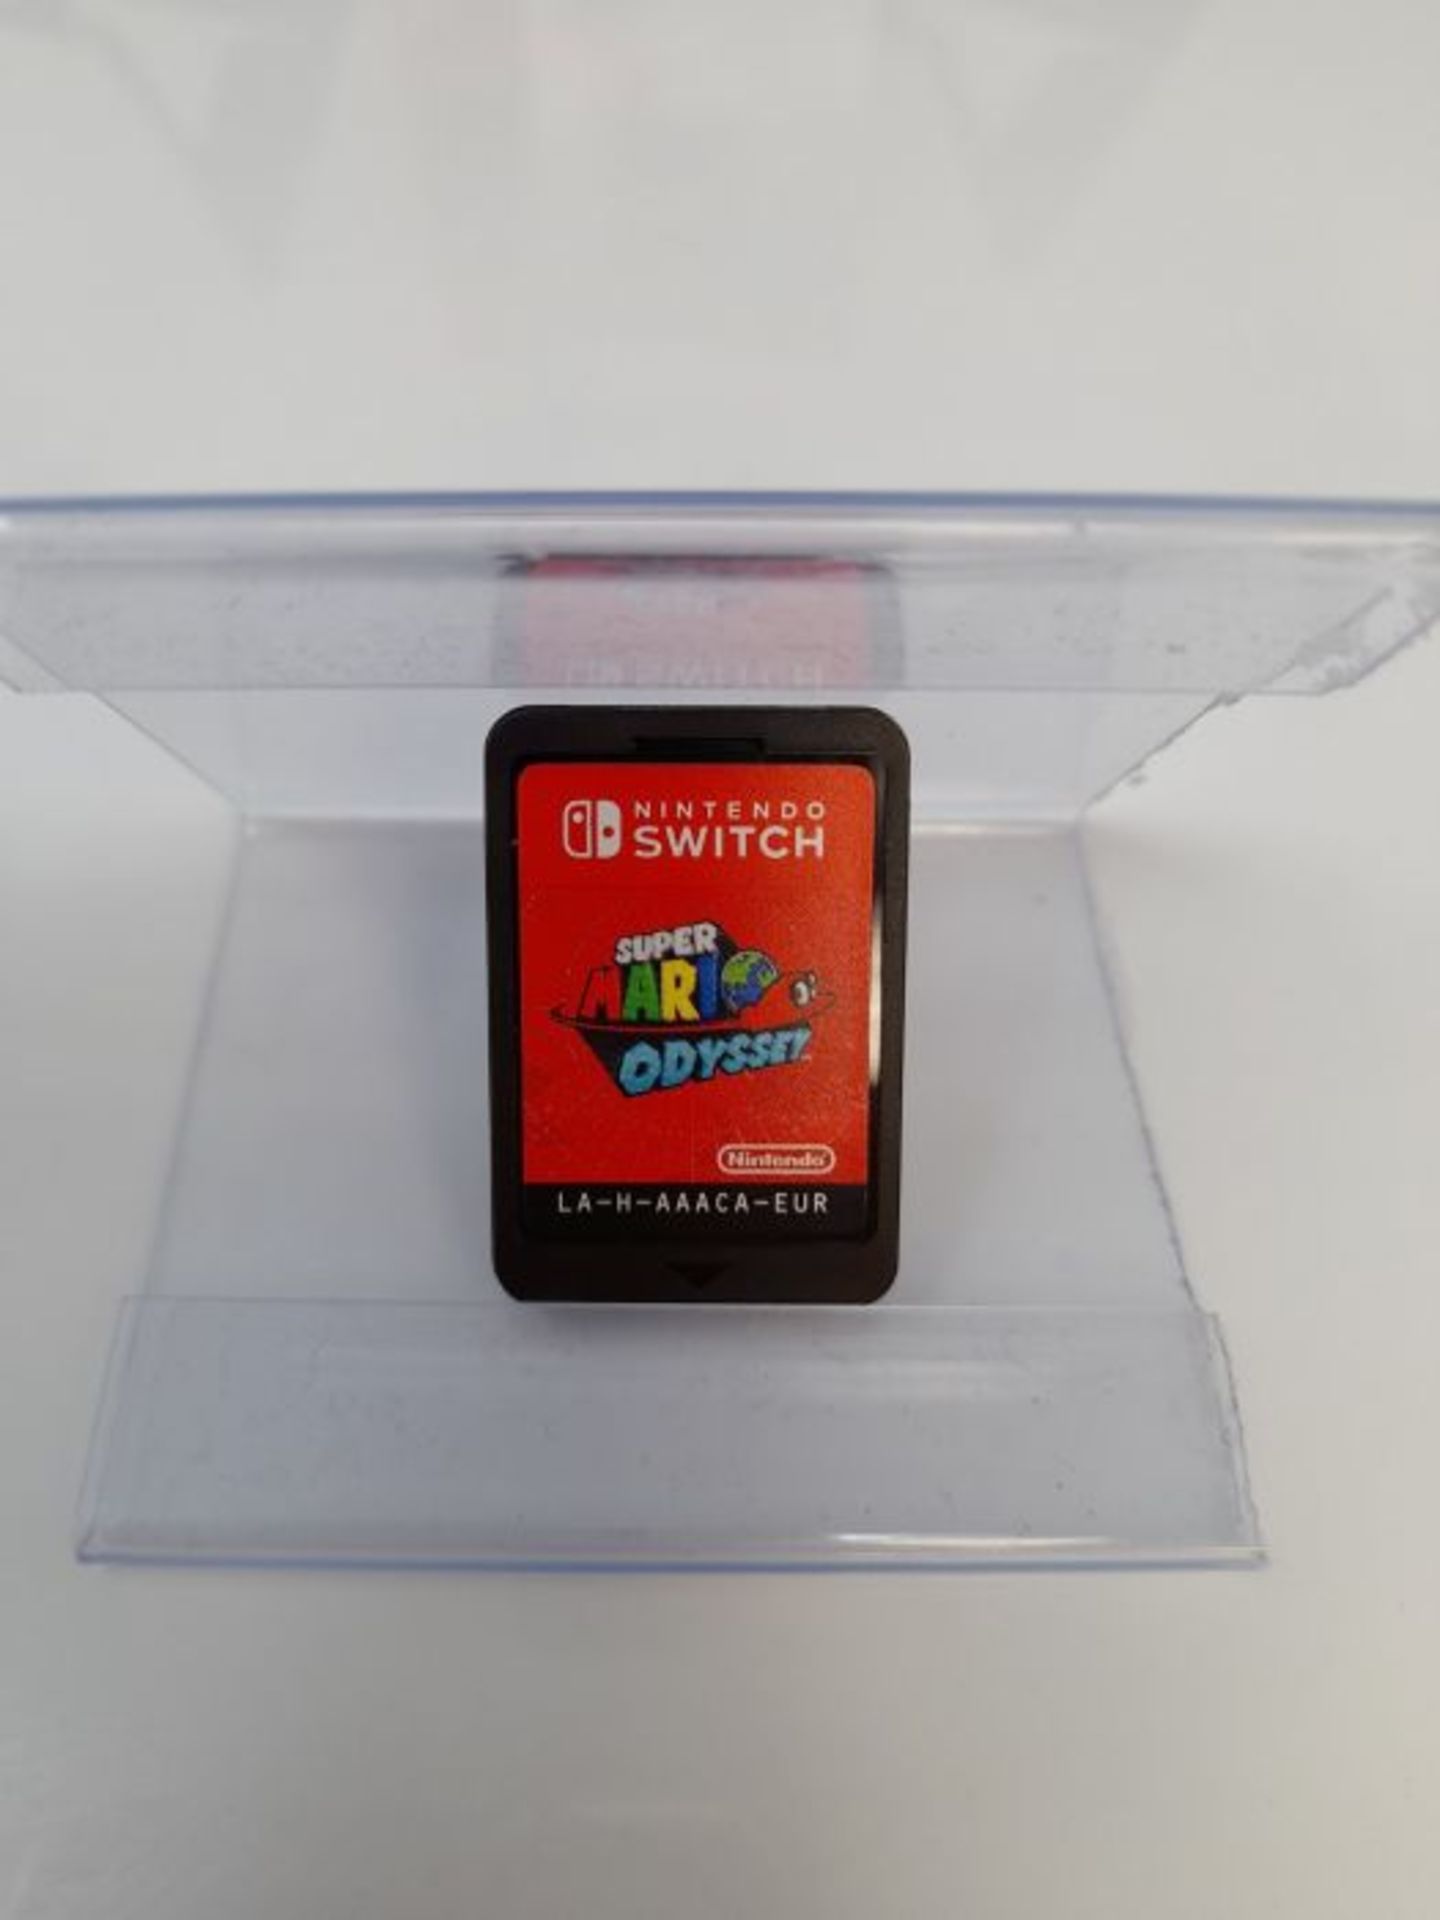 Super Mario Odyssey - Nintendo Switch - Image 3 of 3